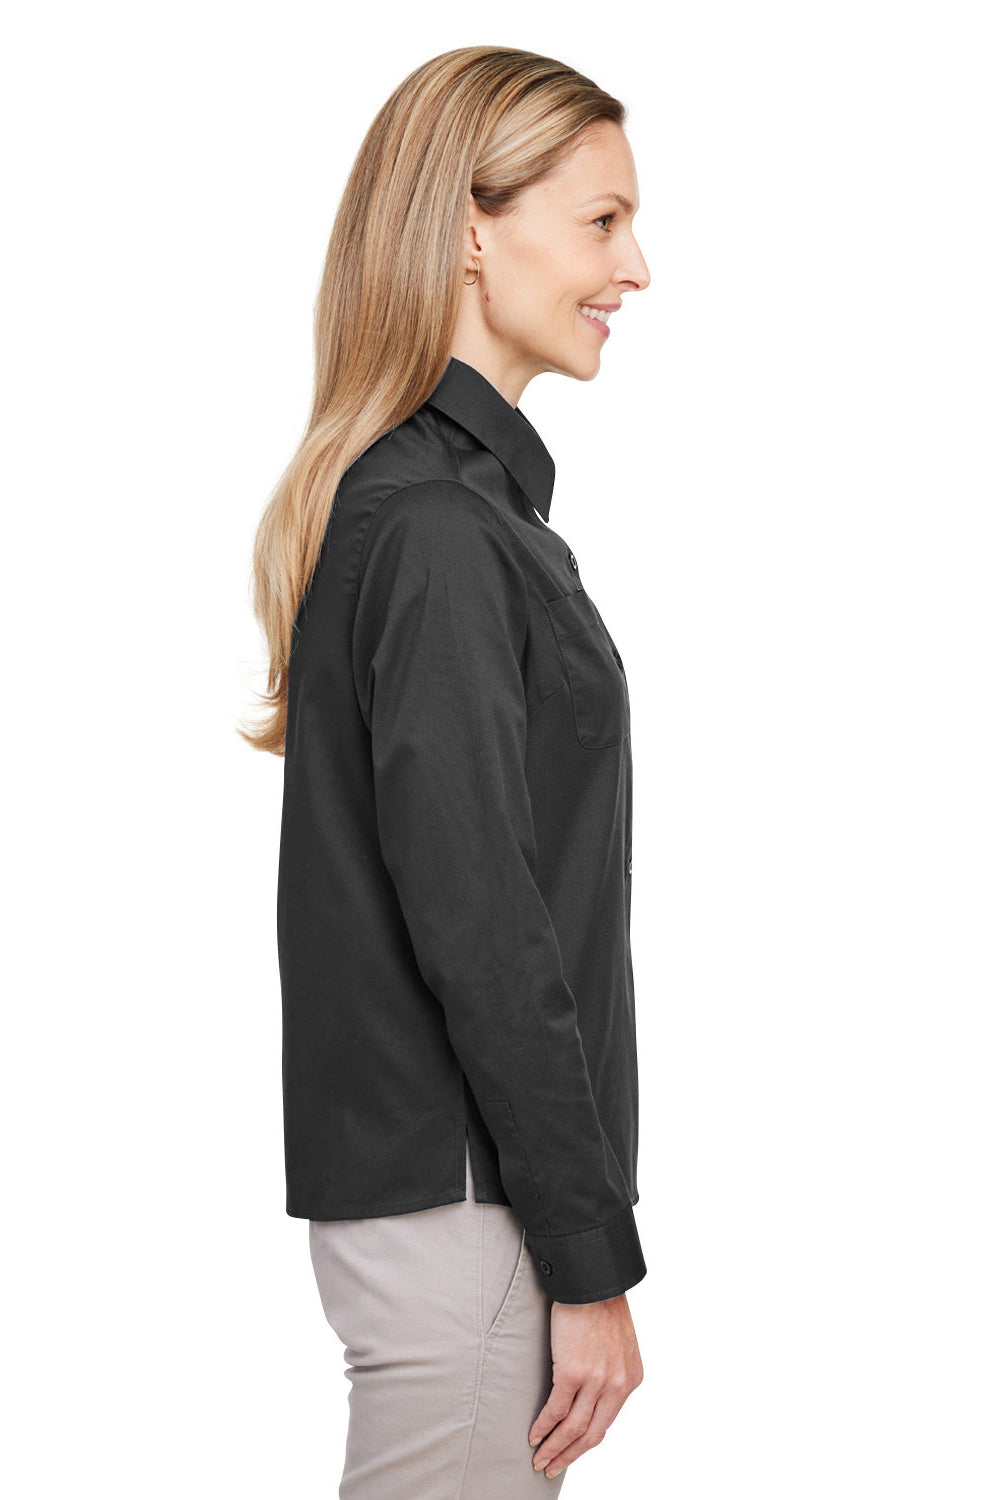 Harriton M585LW Womens Advantage Long Sleeve Button Down Shirt w/ Double Pockets Dark Charcoal Grey Side